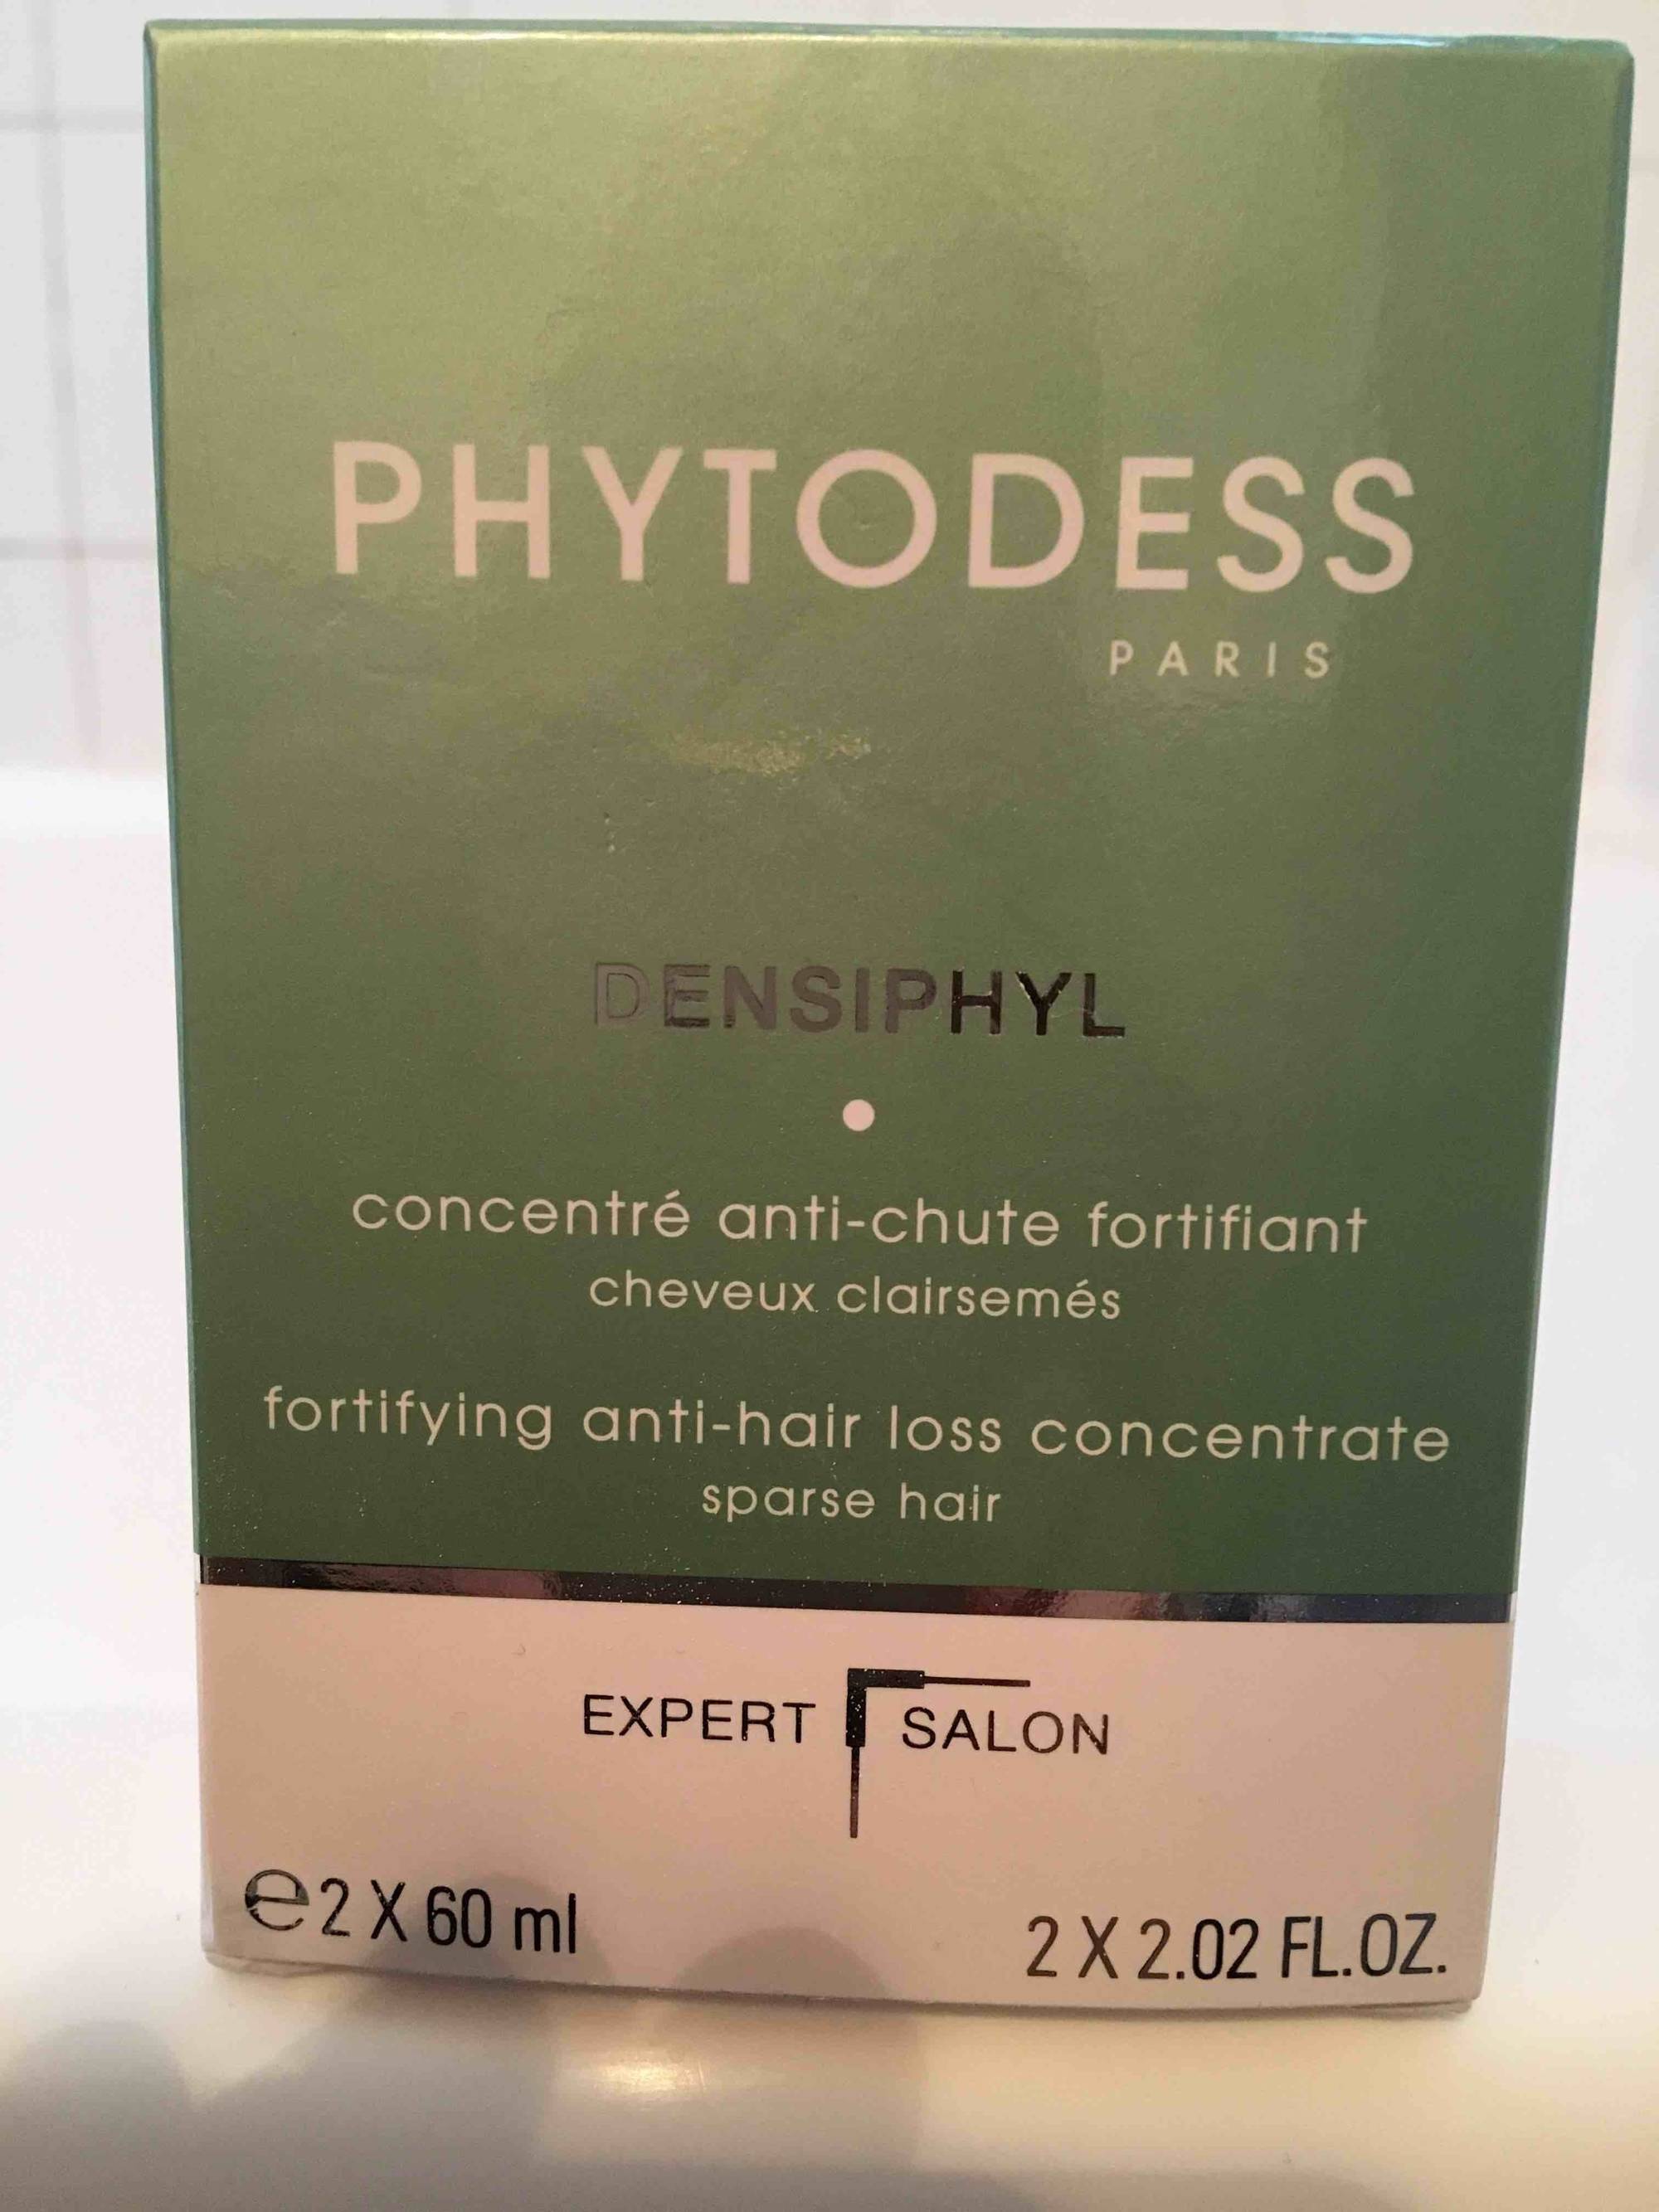 PHYTODESS PARIS - Densiphyl - Concentré anti-chute fortifiant